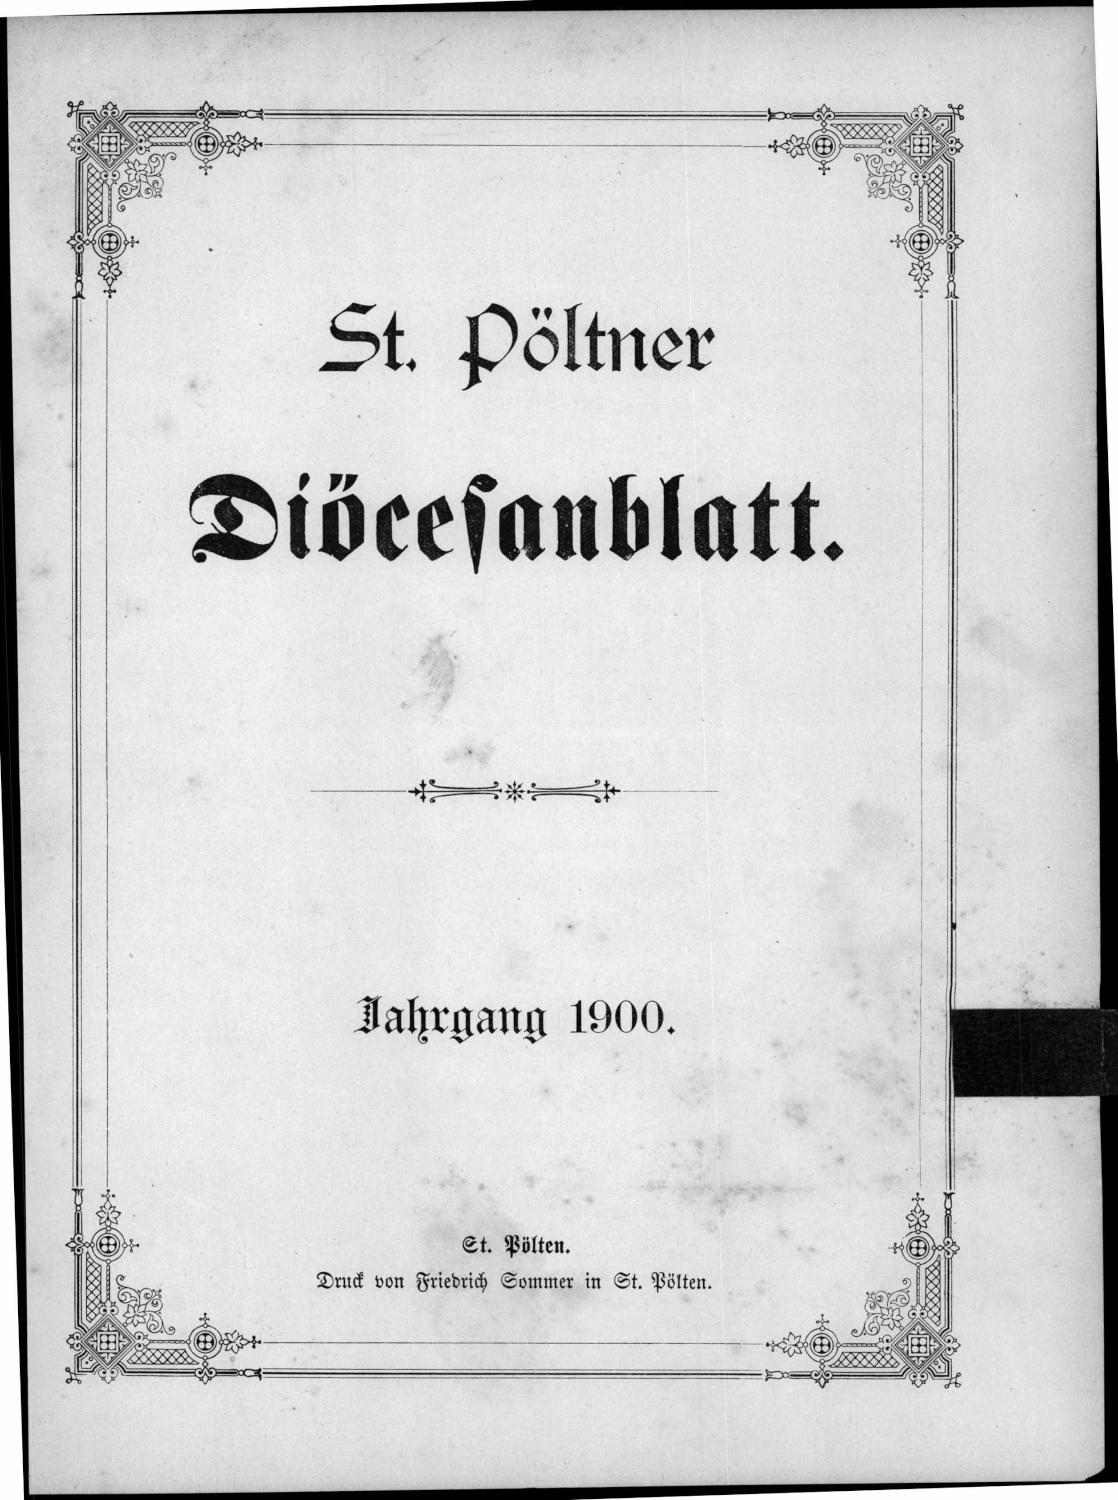 St. Pöltner Diözesanblatt, Jahrgang 1900, Jahrestitelblatt, ANNO/ÖNB